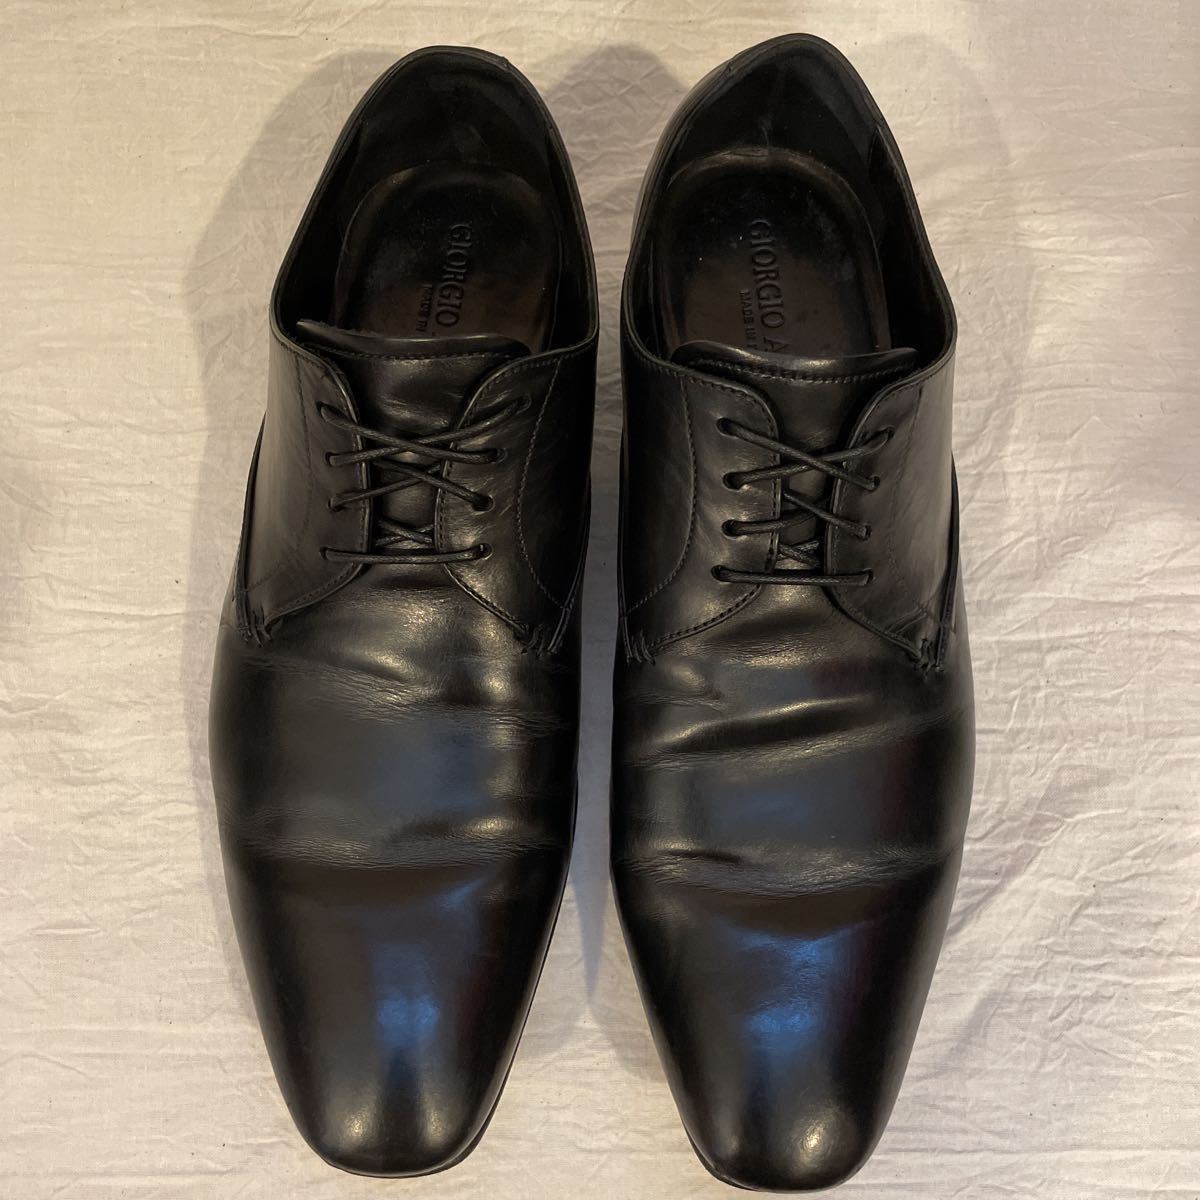 GIORGIO ARMANI ジョルジオ アルマーニ レザーシューズ 革靴 サイズ 6 1/2 (25.5cm位)